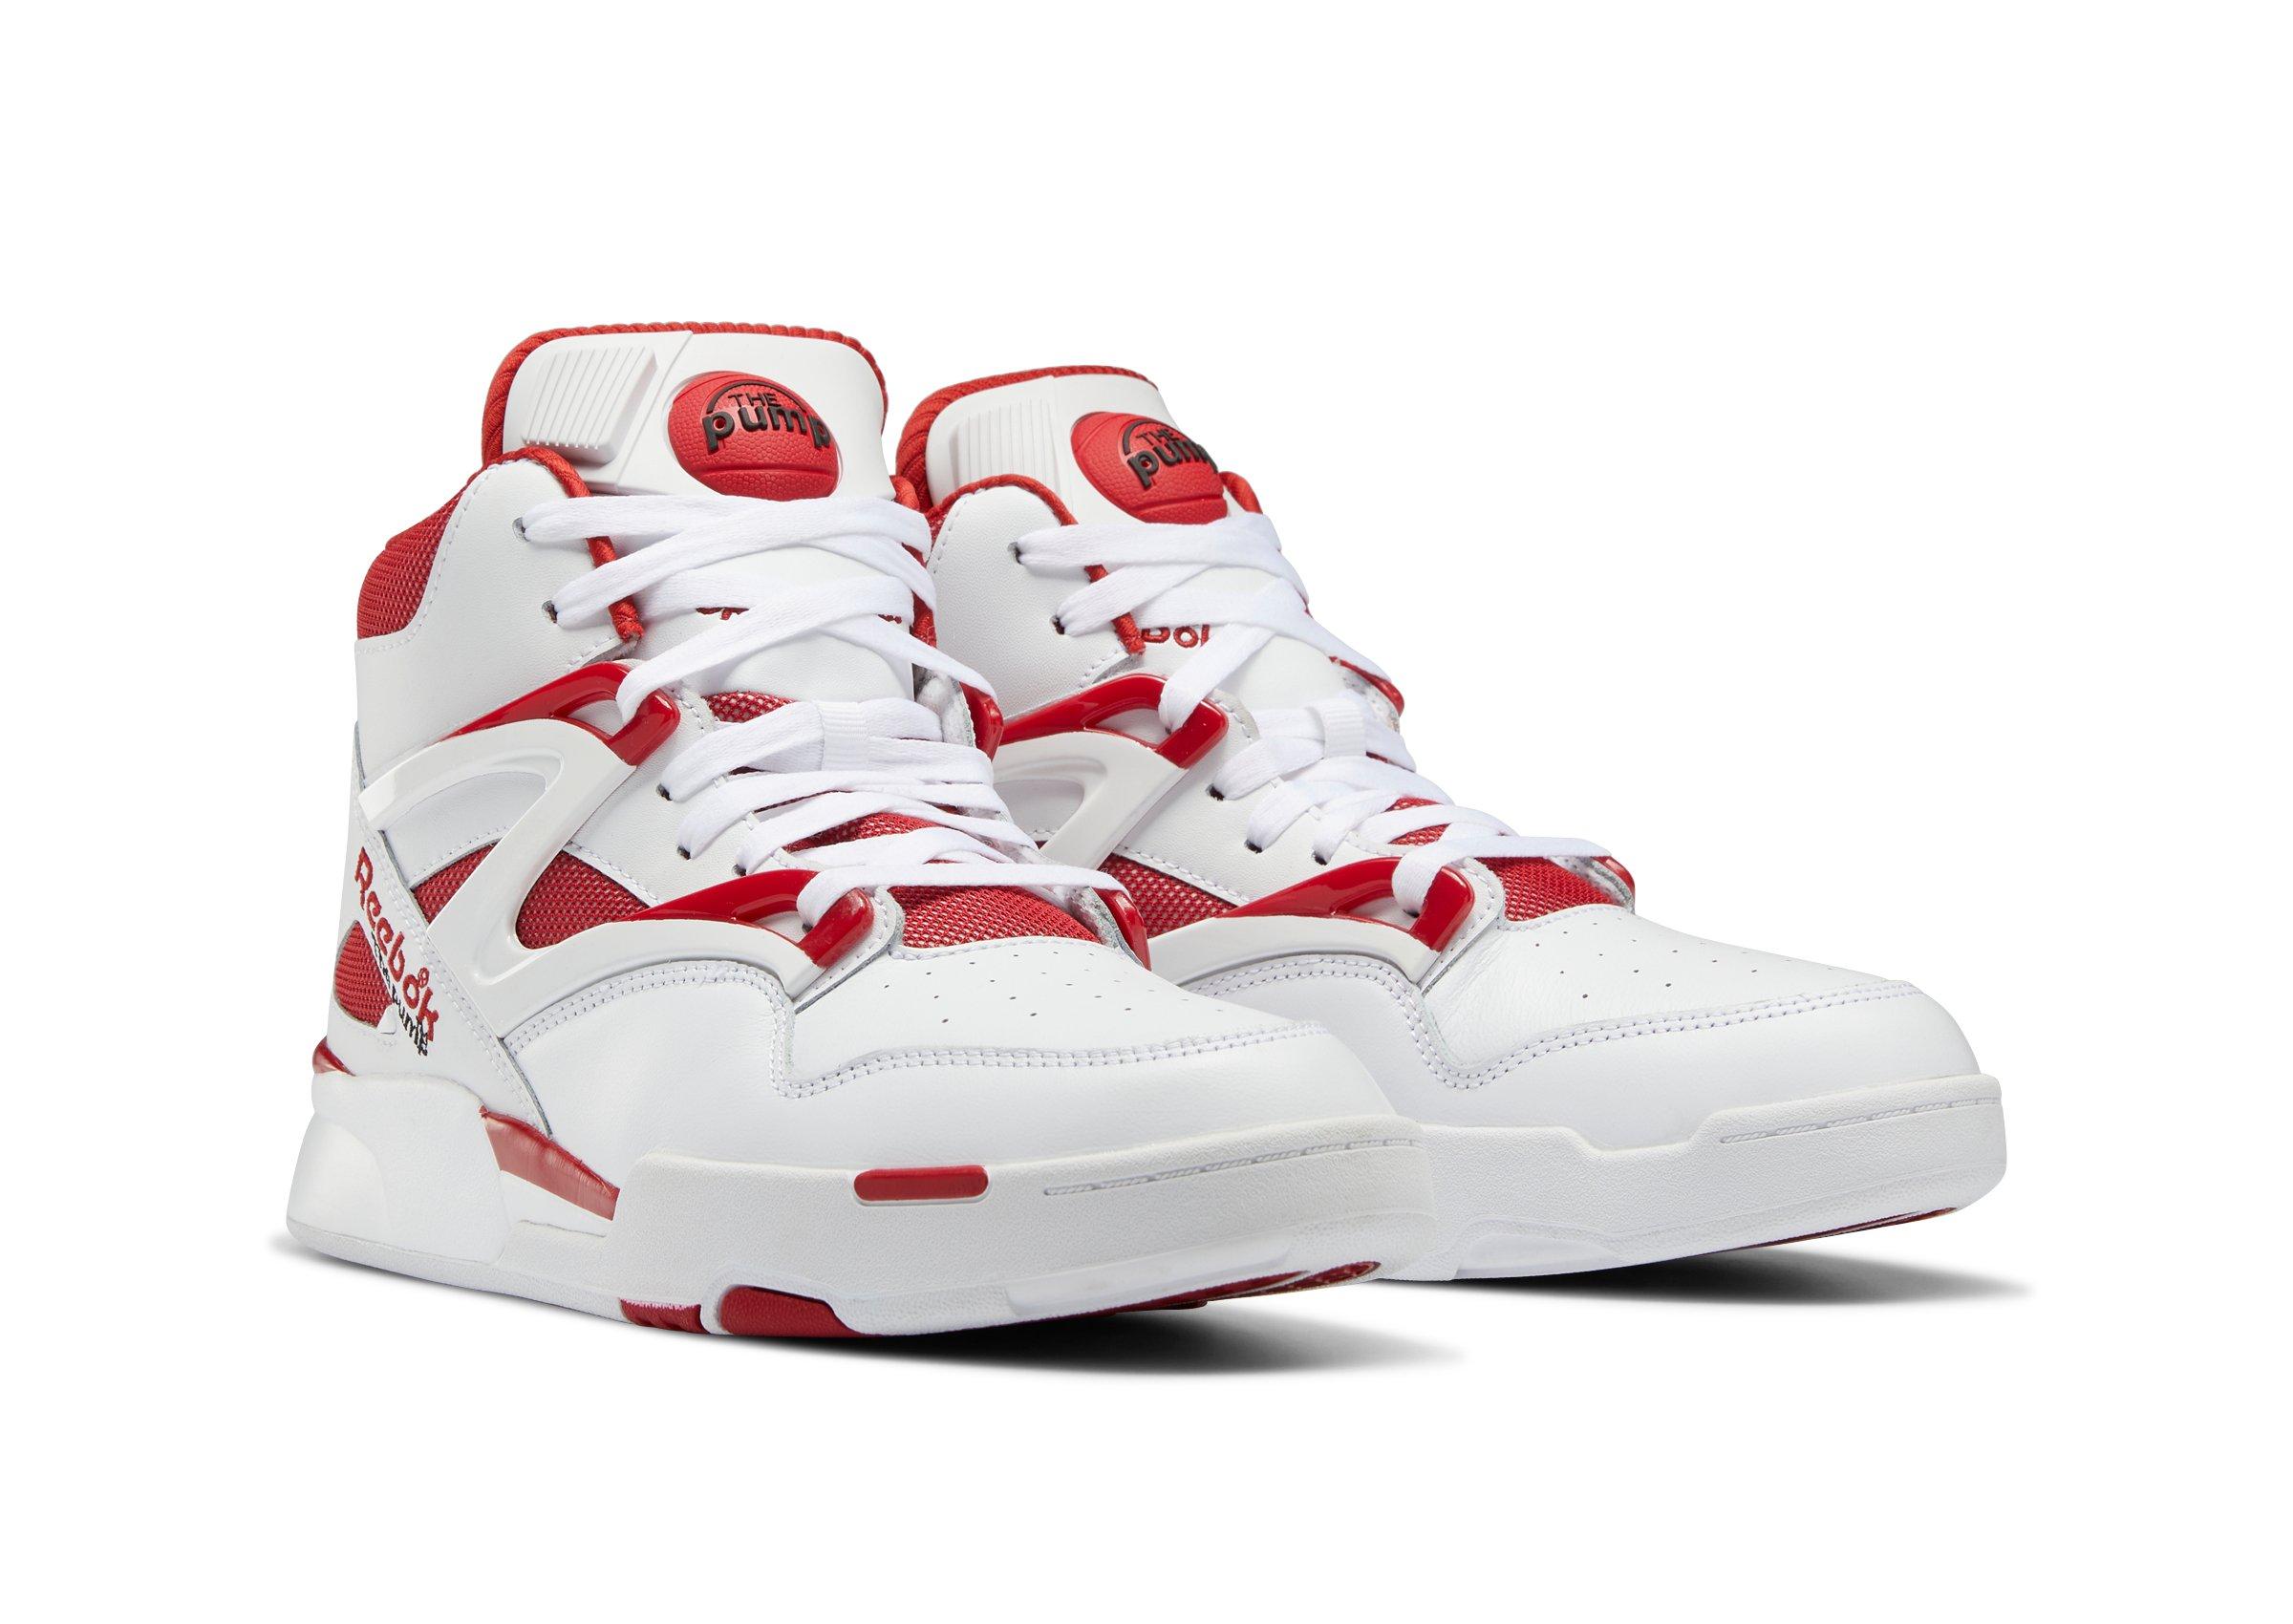 Sneakers Release &#8211; Reebok Pump Omni II &#8220;White/Red/Black&#8221; Men&#8217;s Basketball Launching 12/31